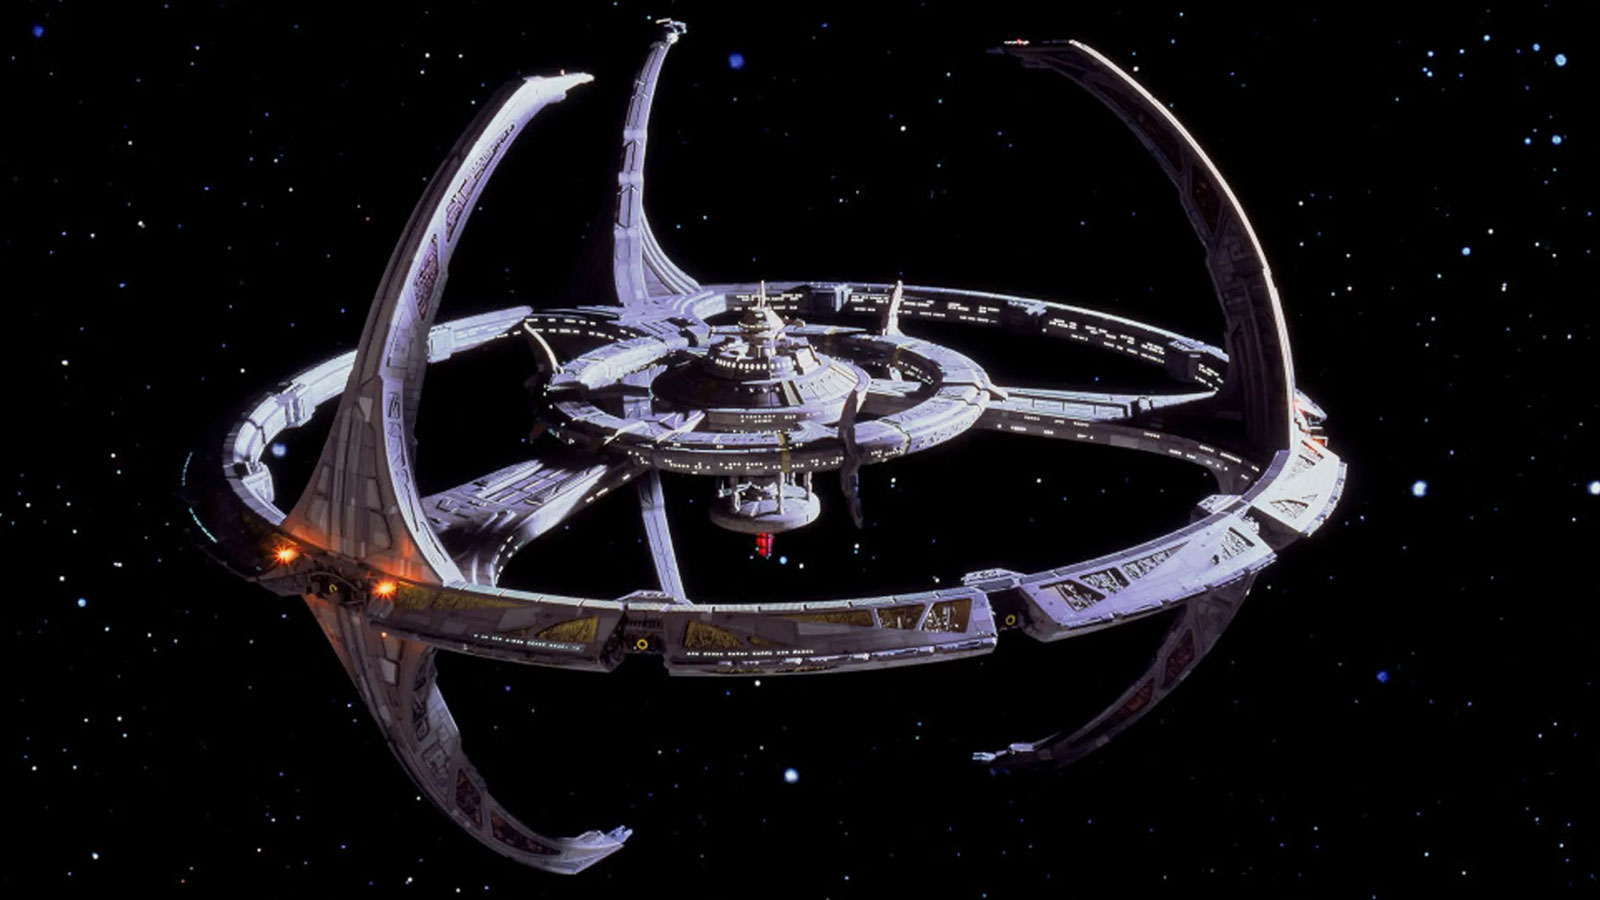 Star Trek: Deep Space Nine DVD Box Set Coming In February